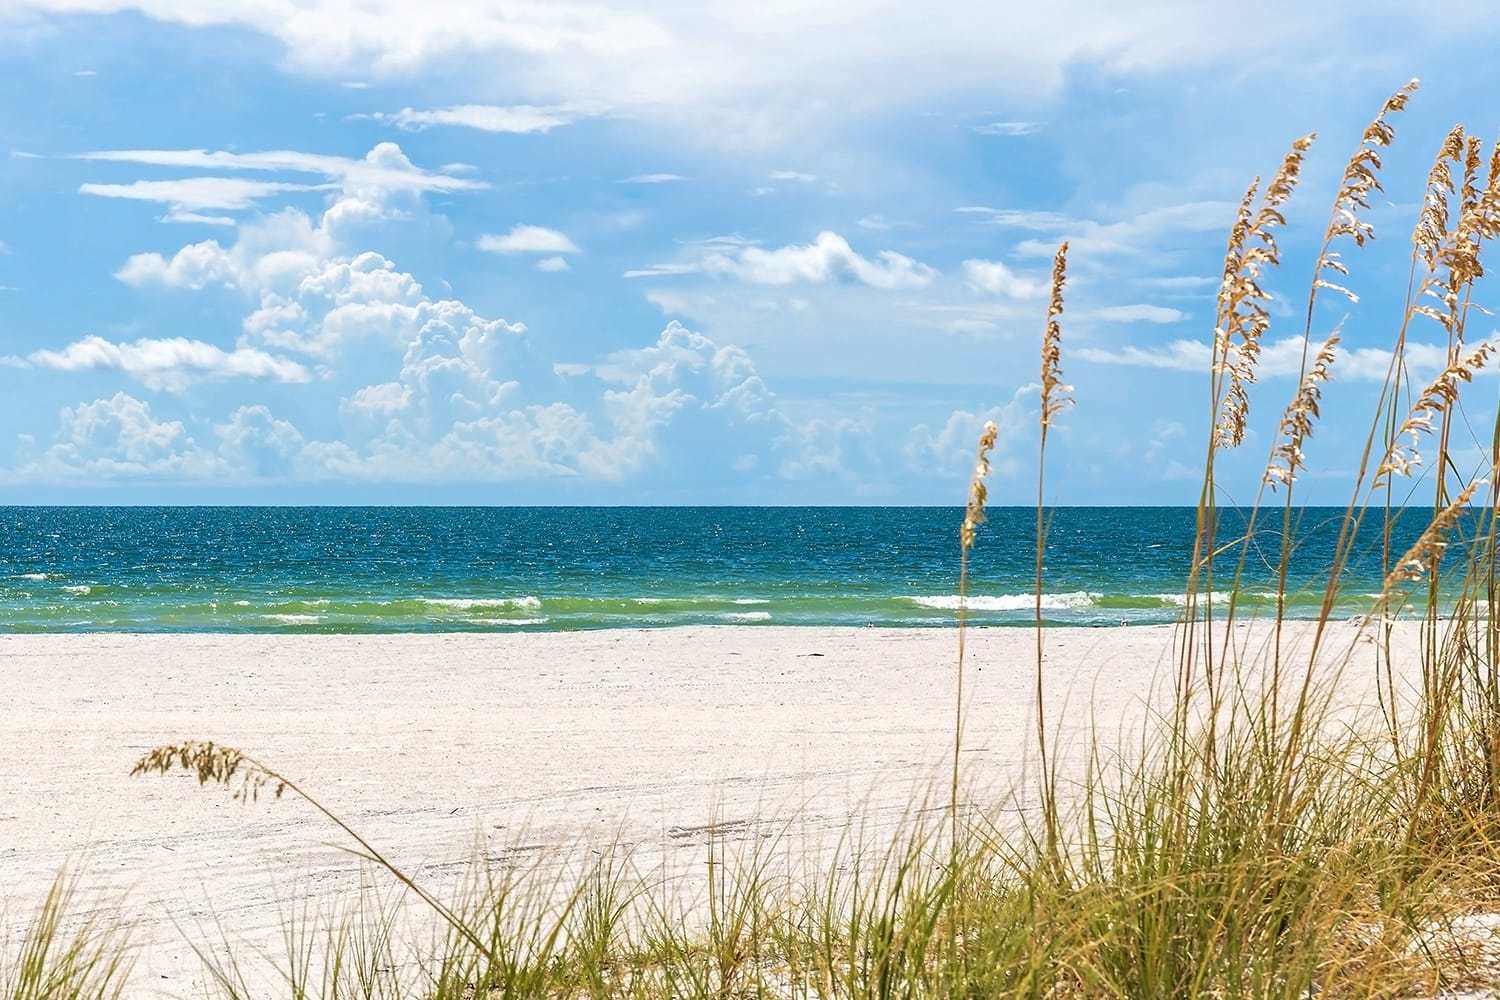 St. Pete beach in Florida, USA